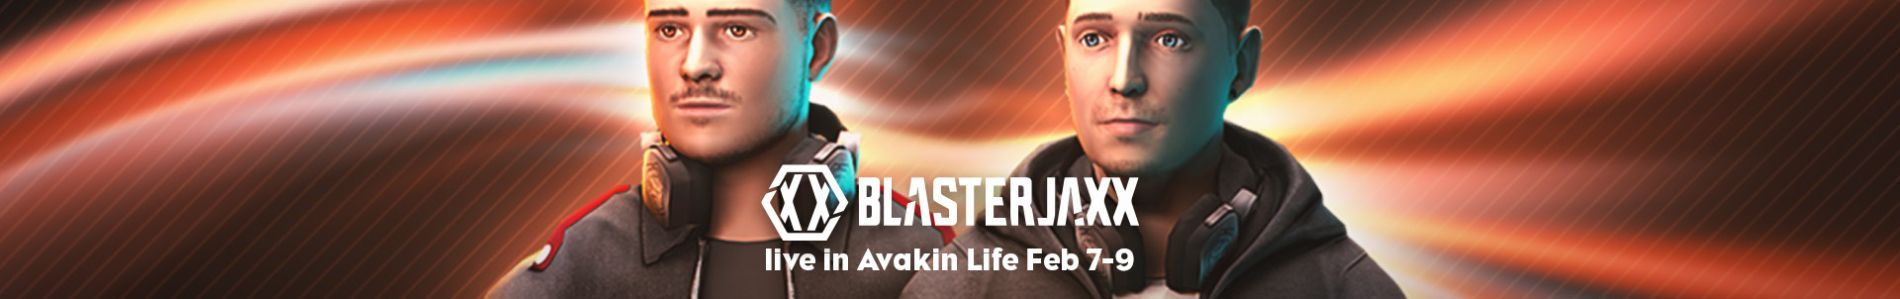 Spinnin' Records x Avakin Life with Blasterjaxx